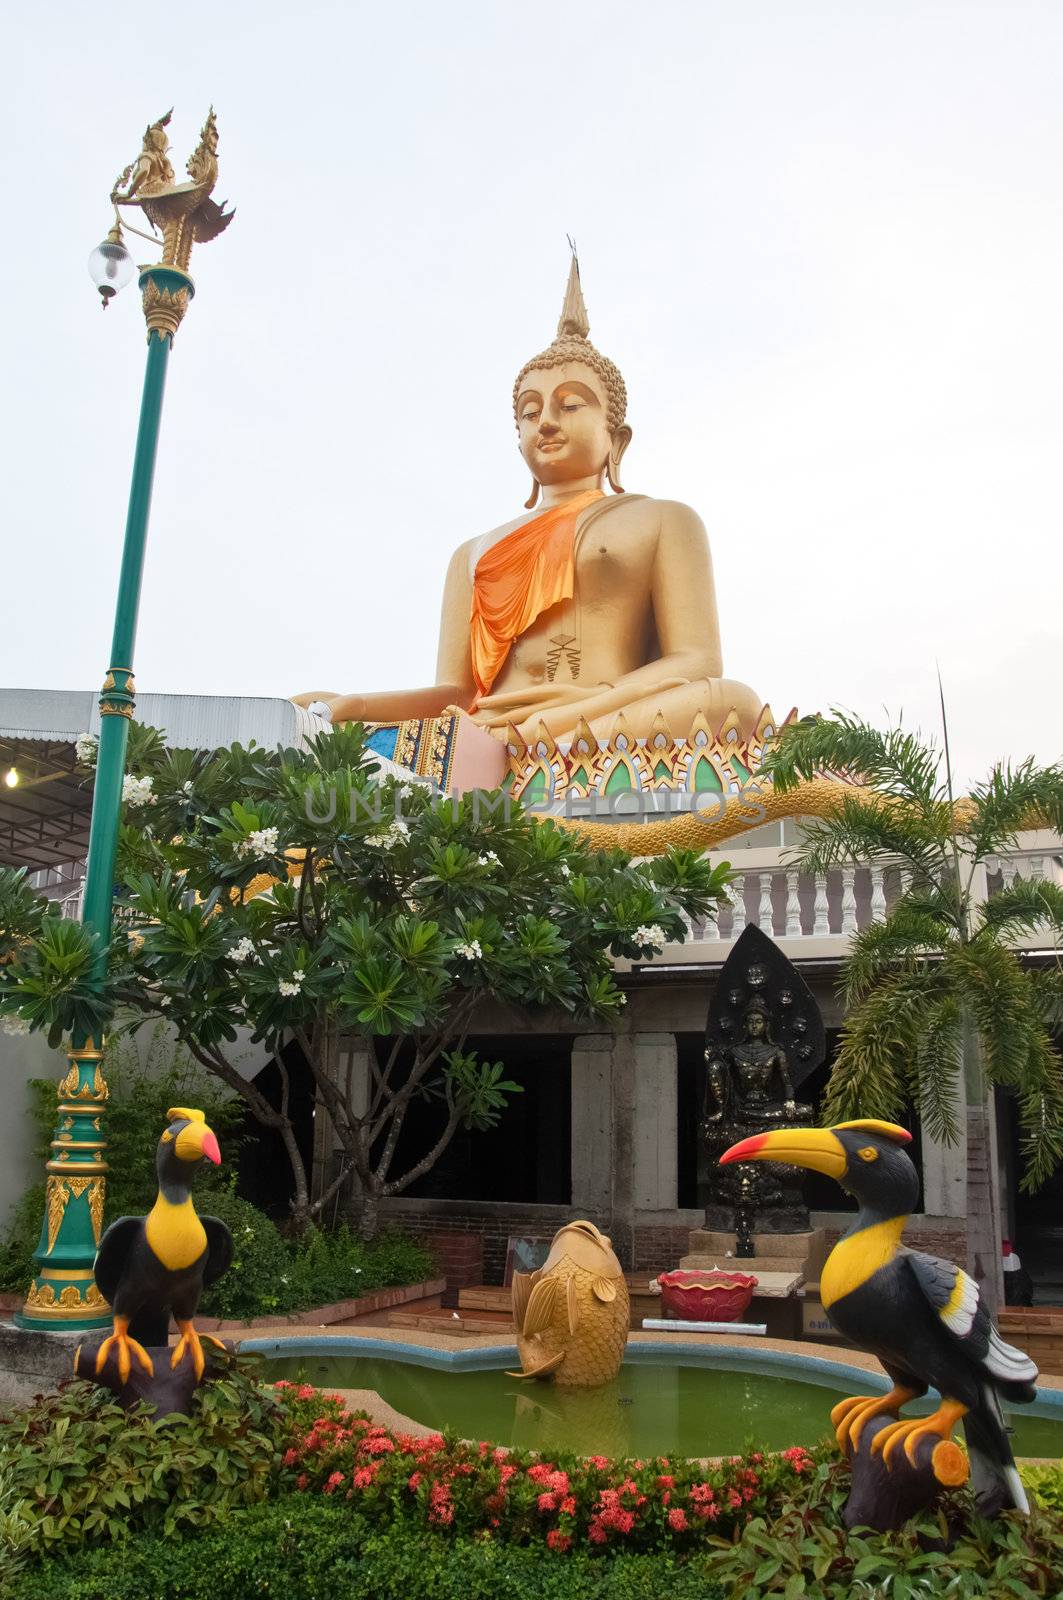 The big buddha statue sitting outdoor at Lanna temple, Pathumtani Thailand